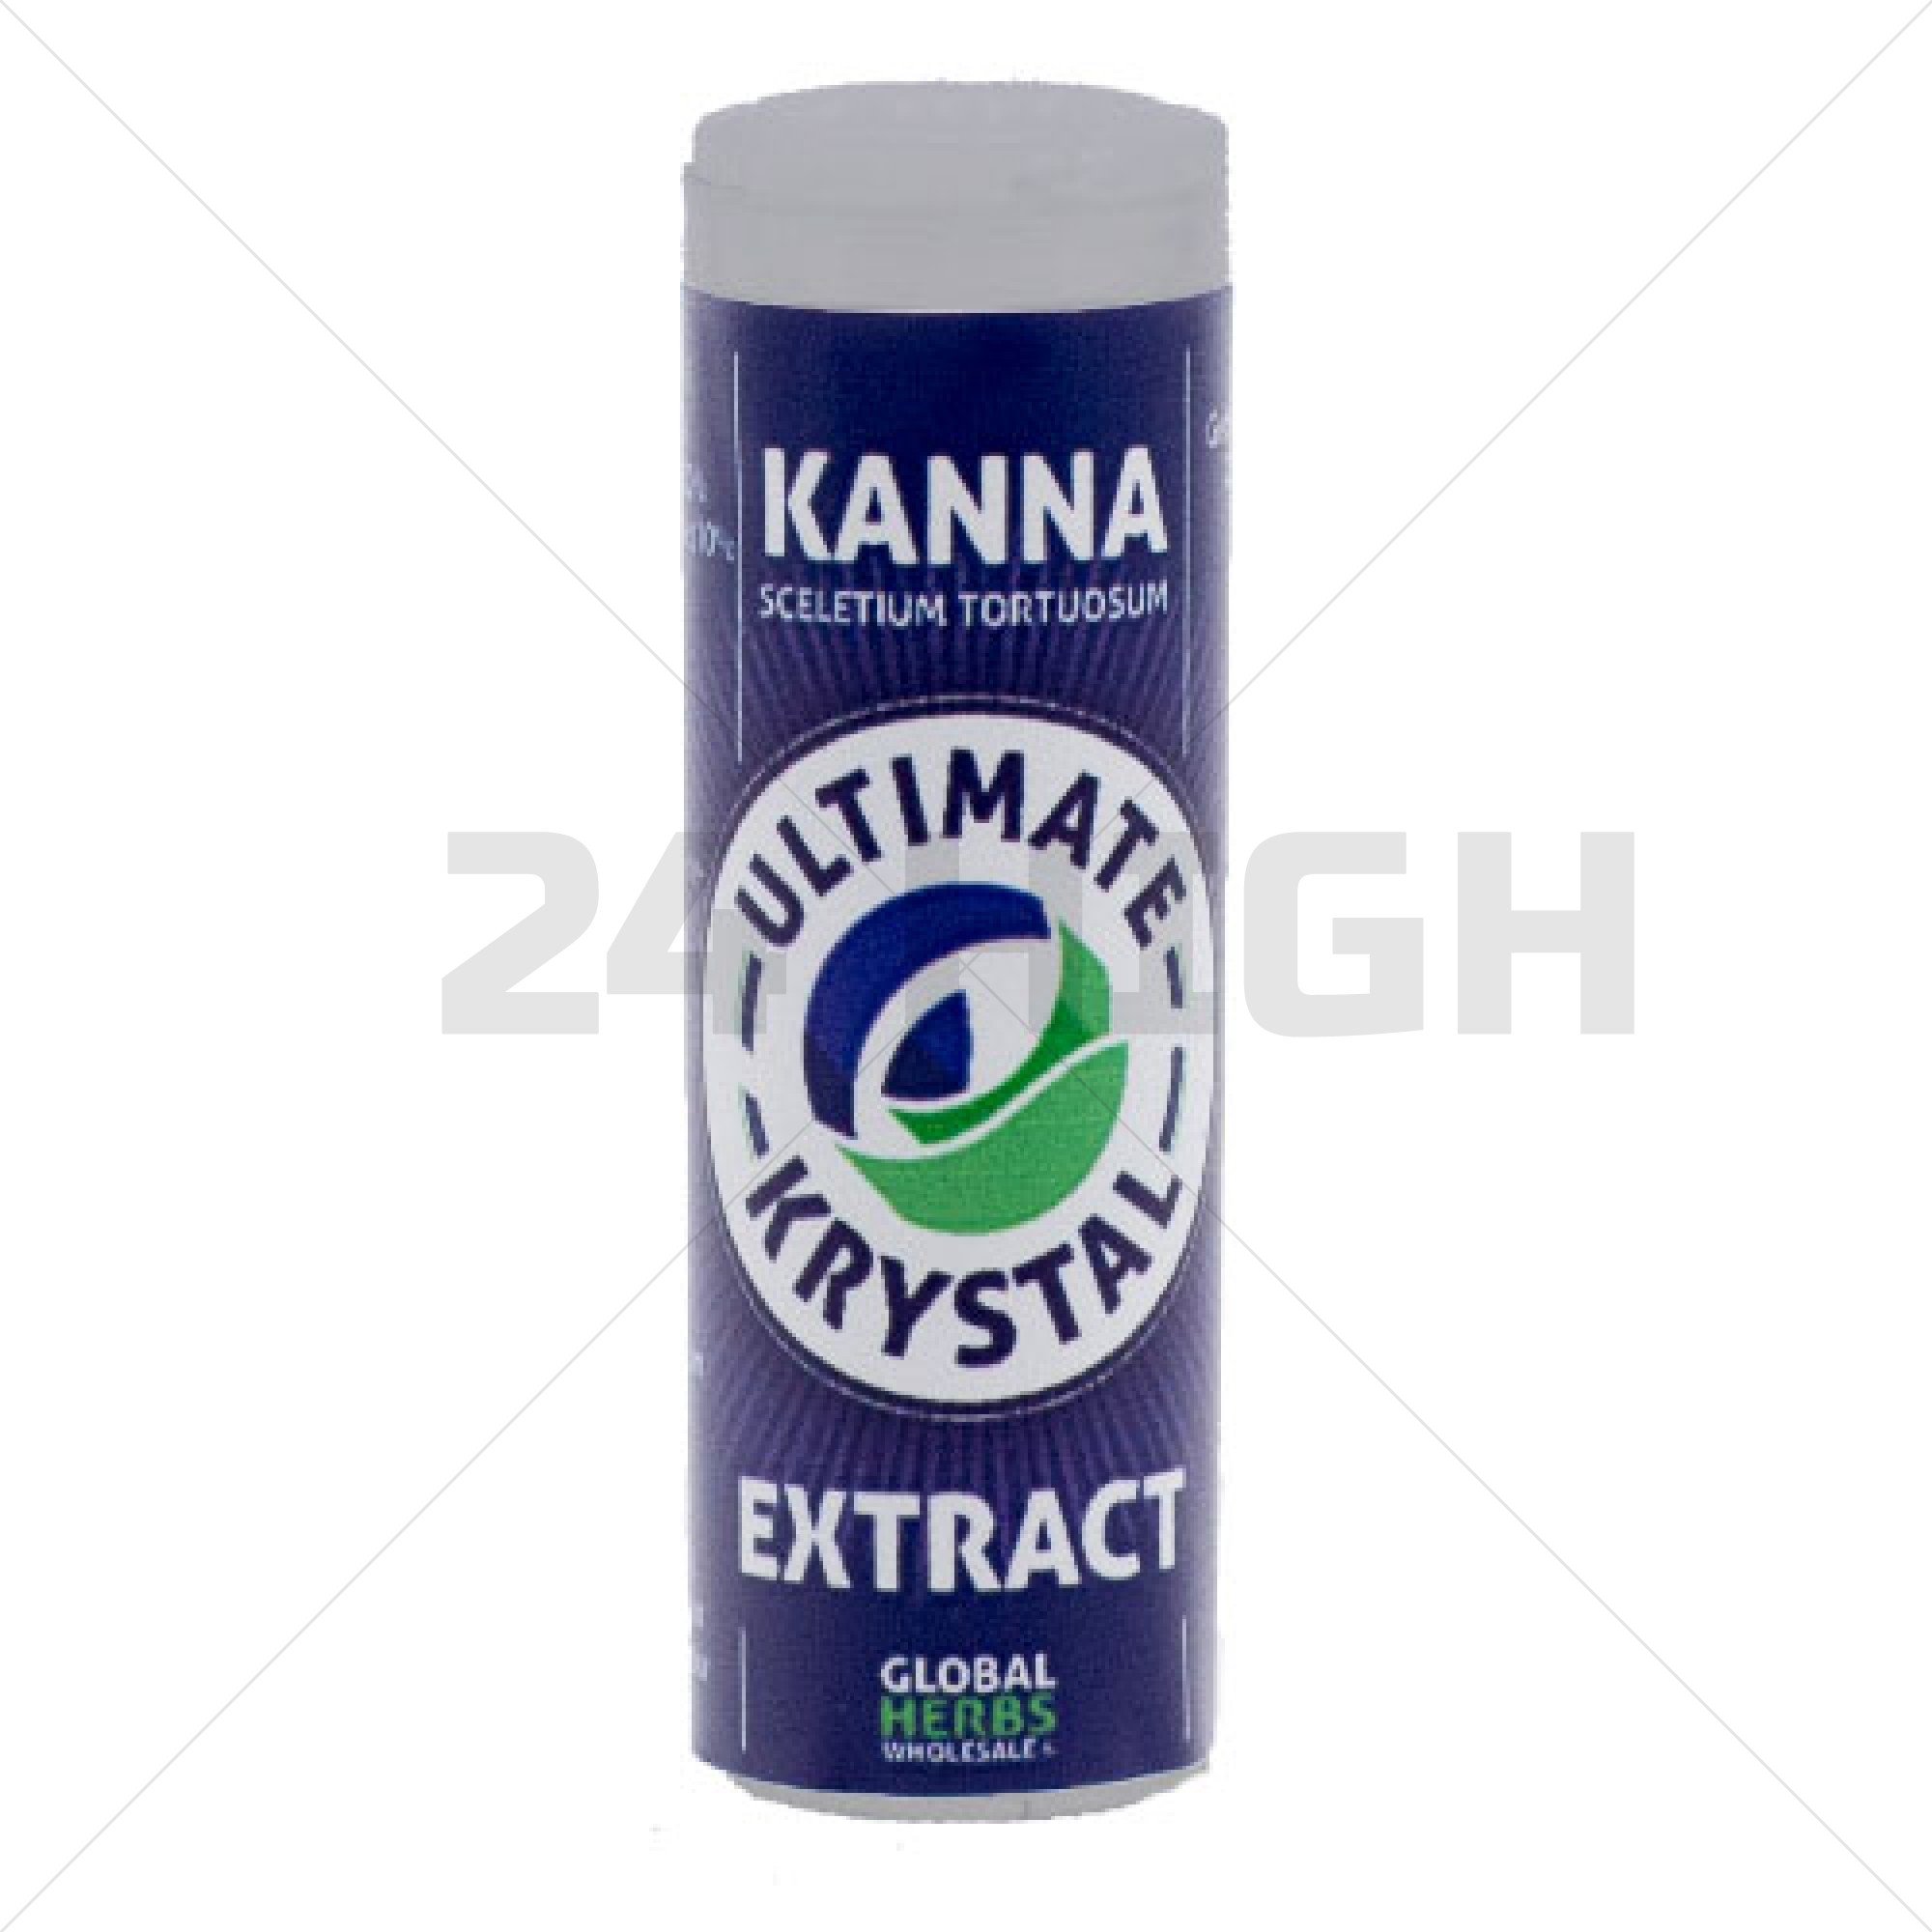 Kanna Krystal Ultimate Extract - 1g